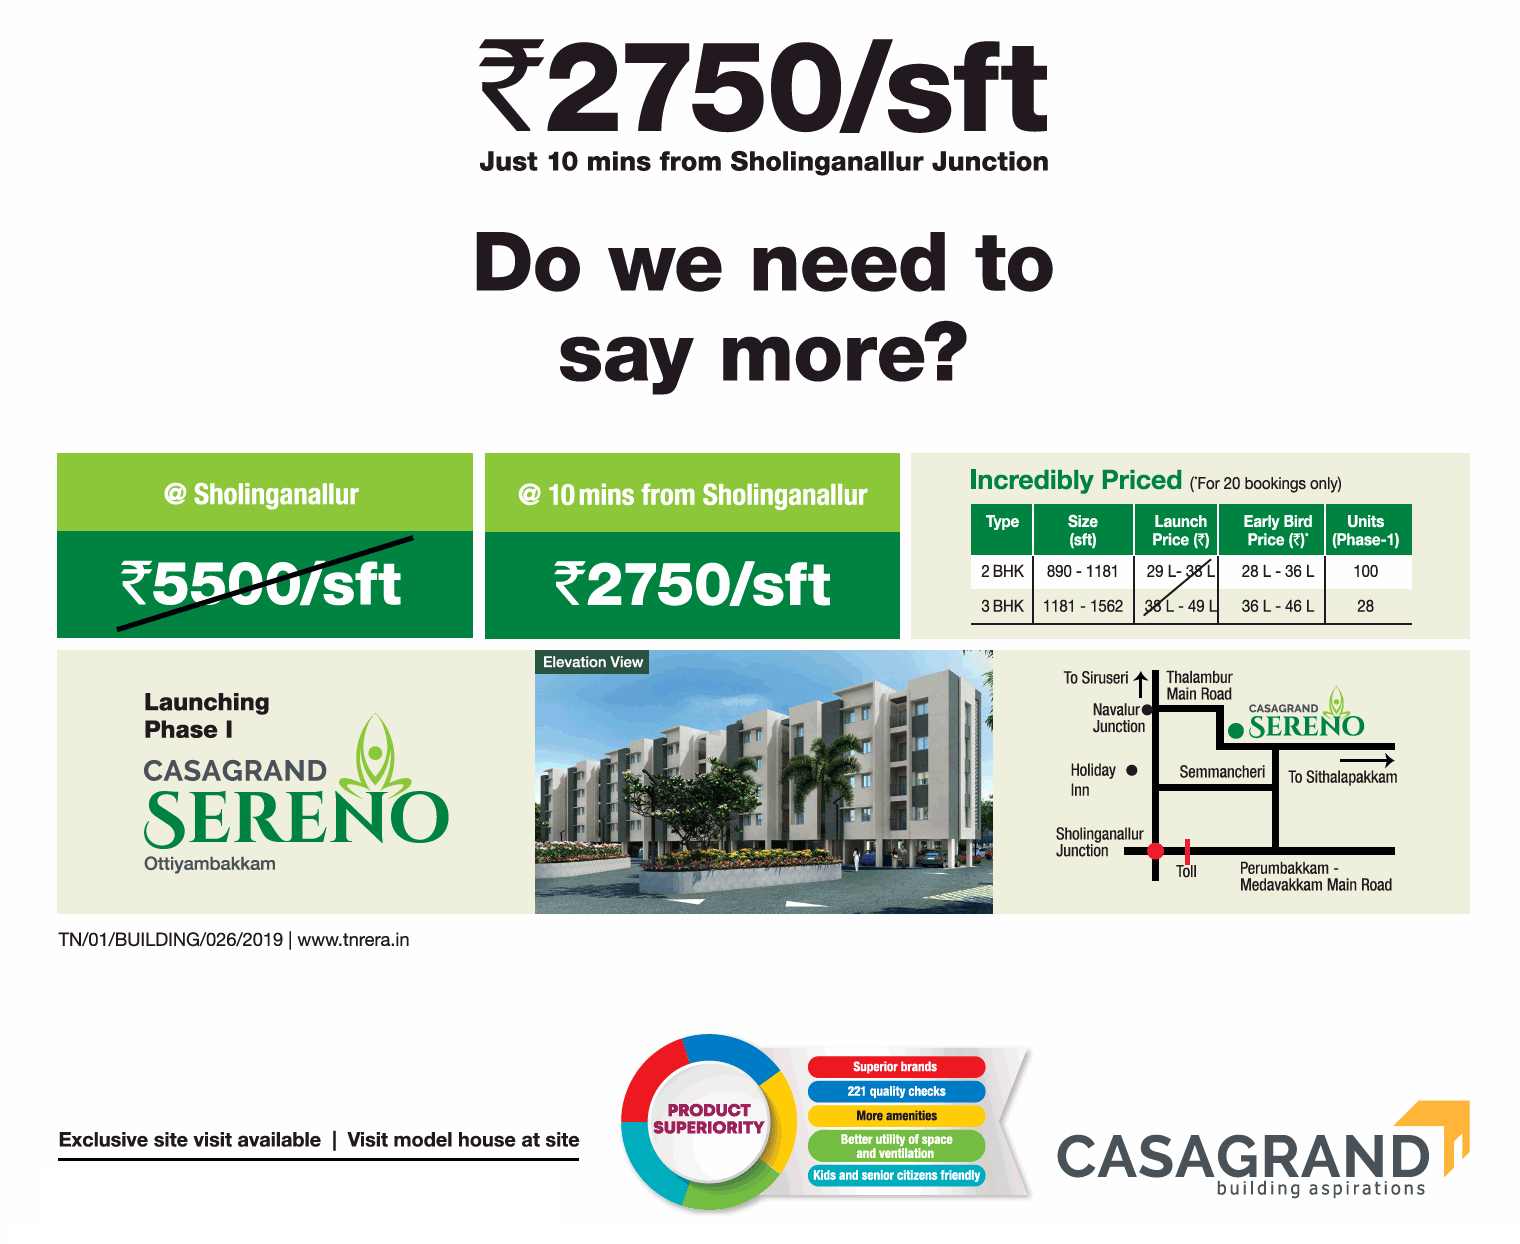 Book luxury apartments @ Rs 2750 per sqft at Casagrand Sereno in Chennai